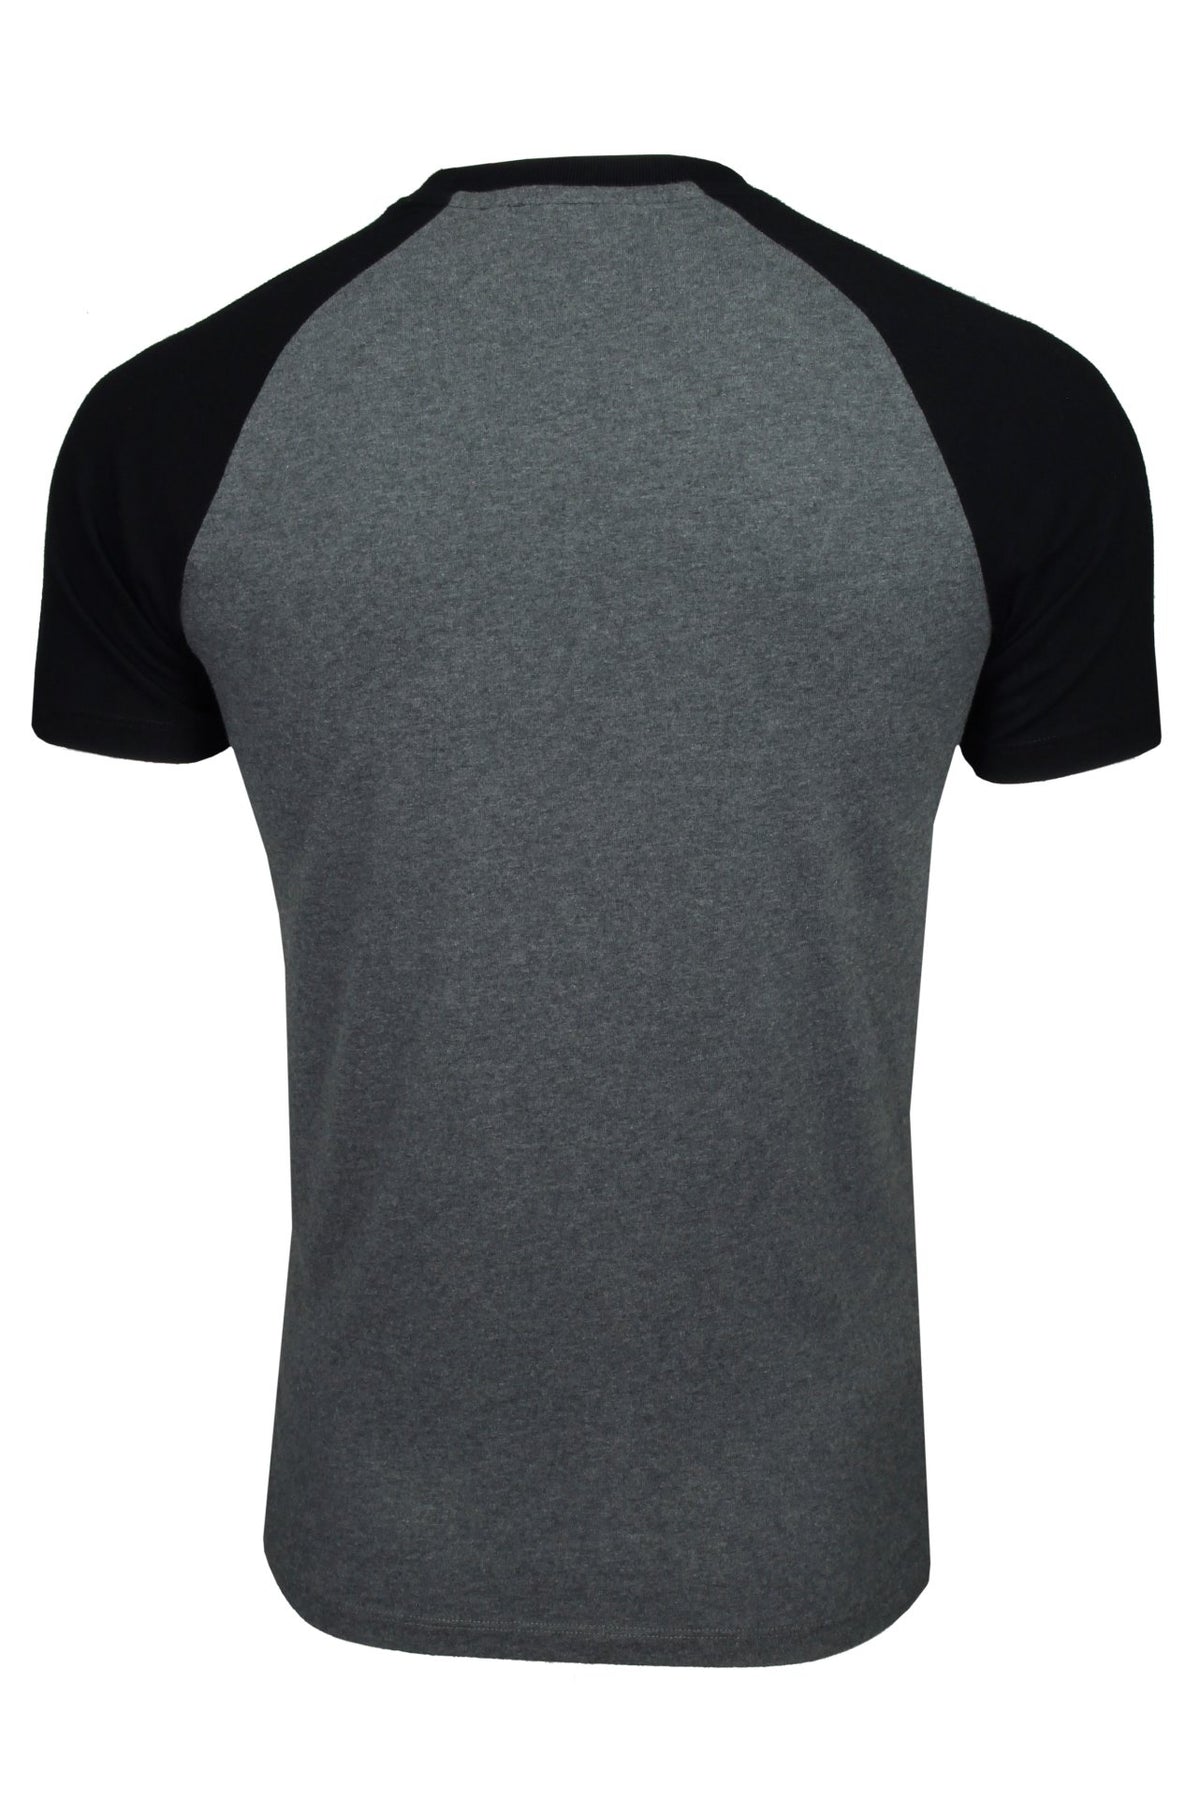 Superdry Mens Organic Cotton Essential Logo Baseball T-Shirt, 03, M1011838A, Rich Charcoal Marl/ Black